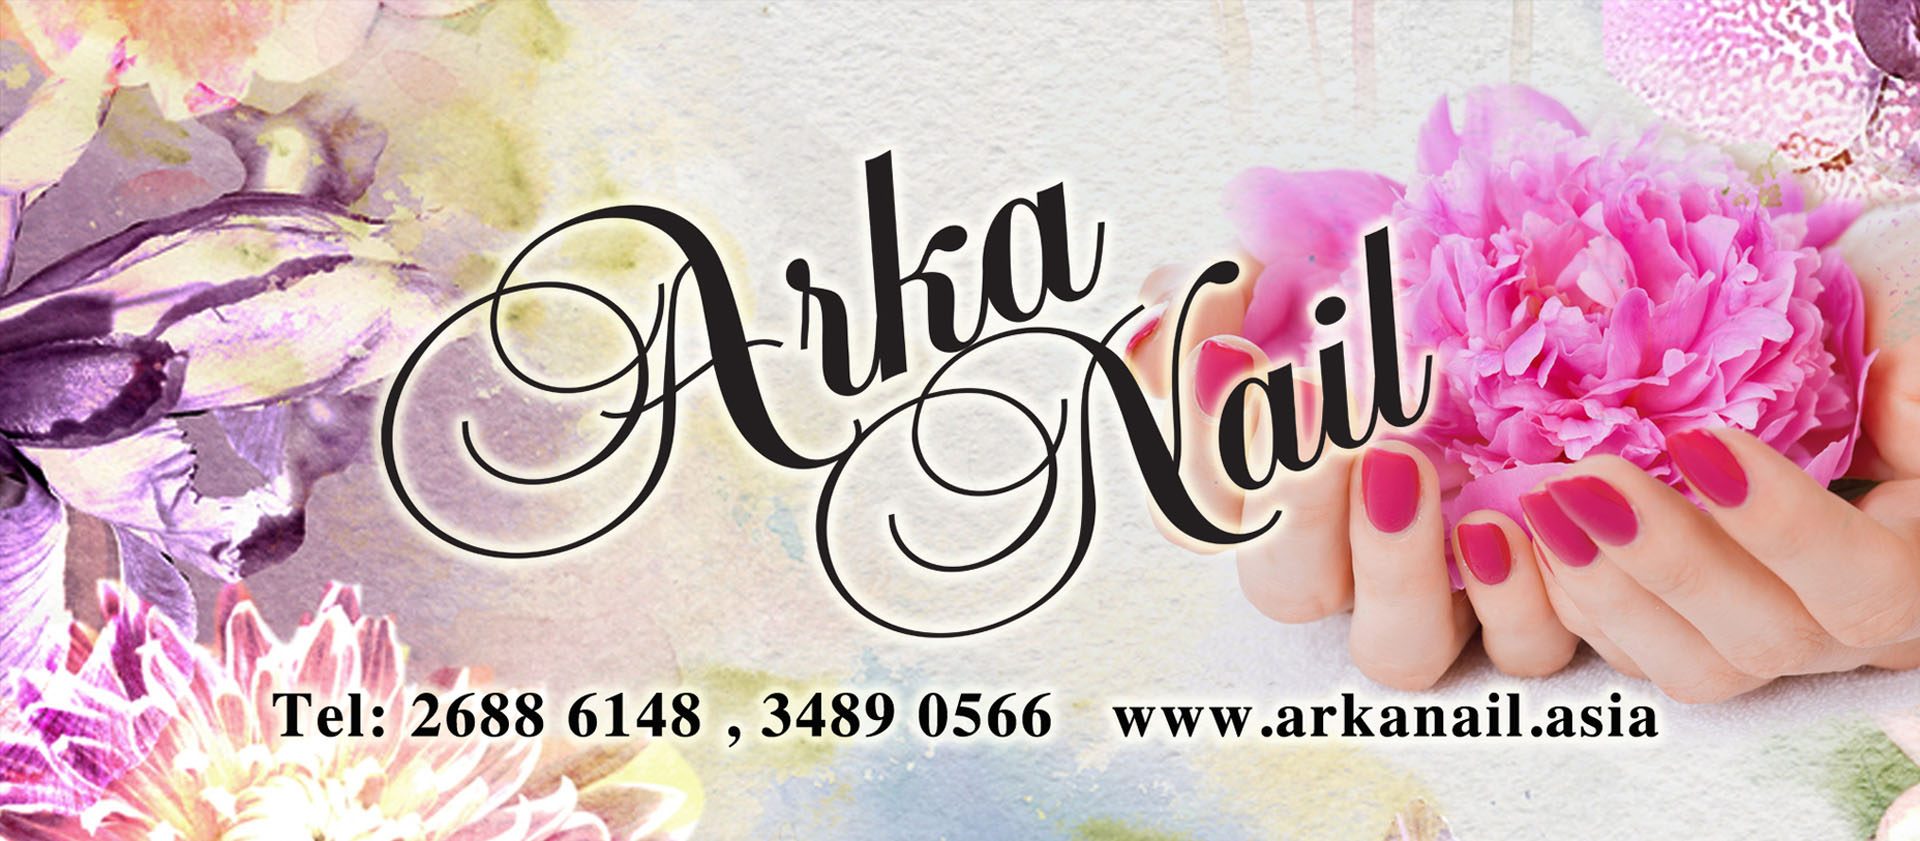 Arka Nail Banner Design